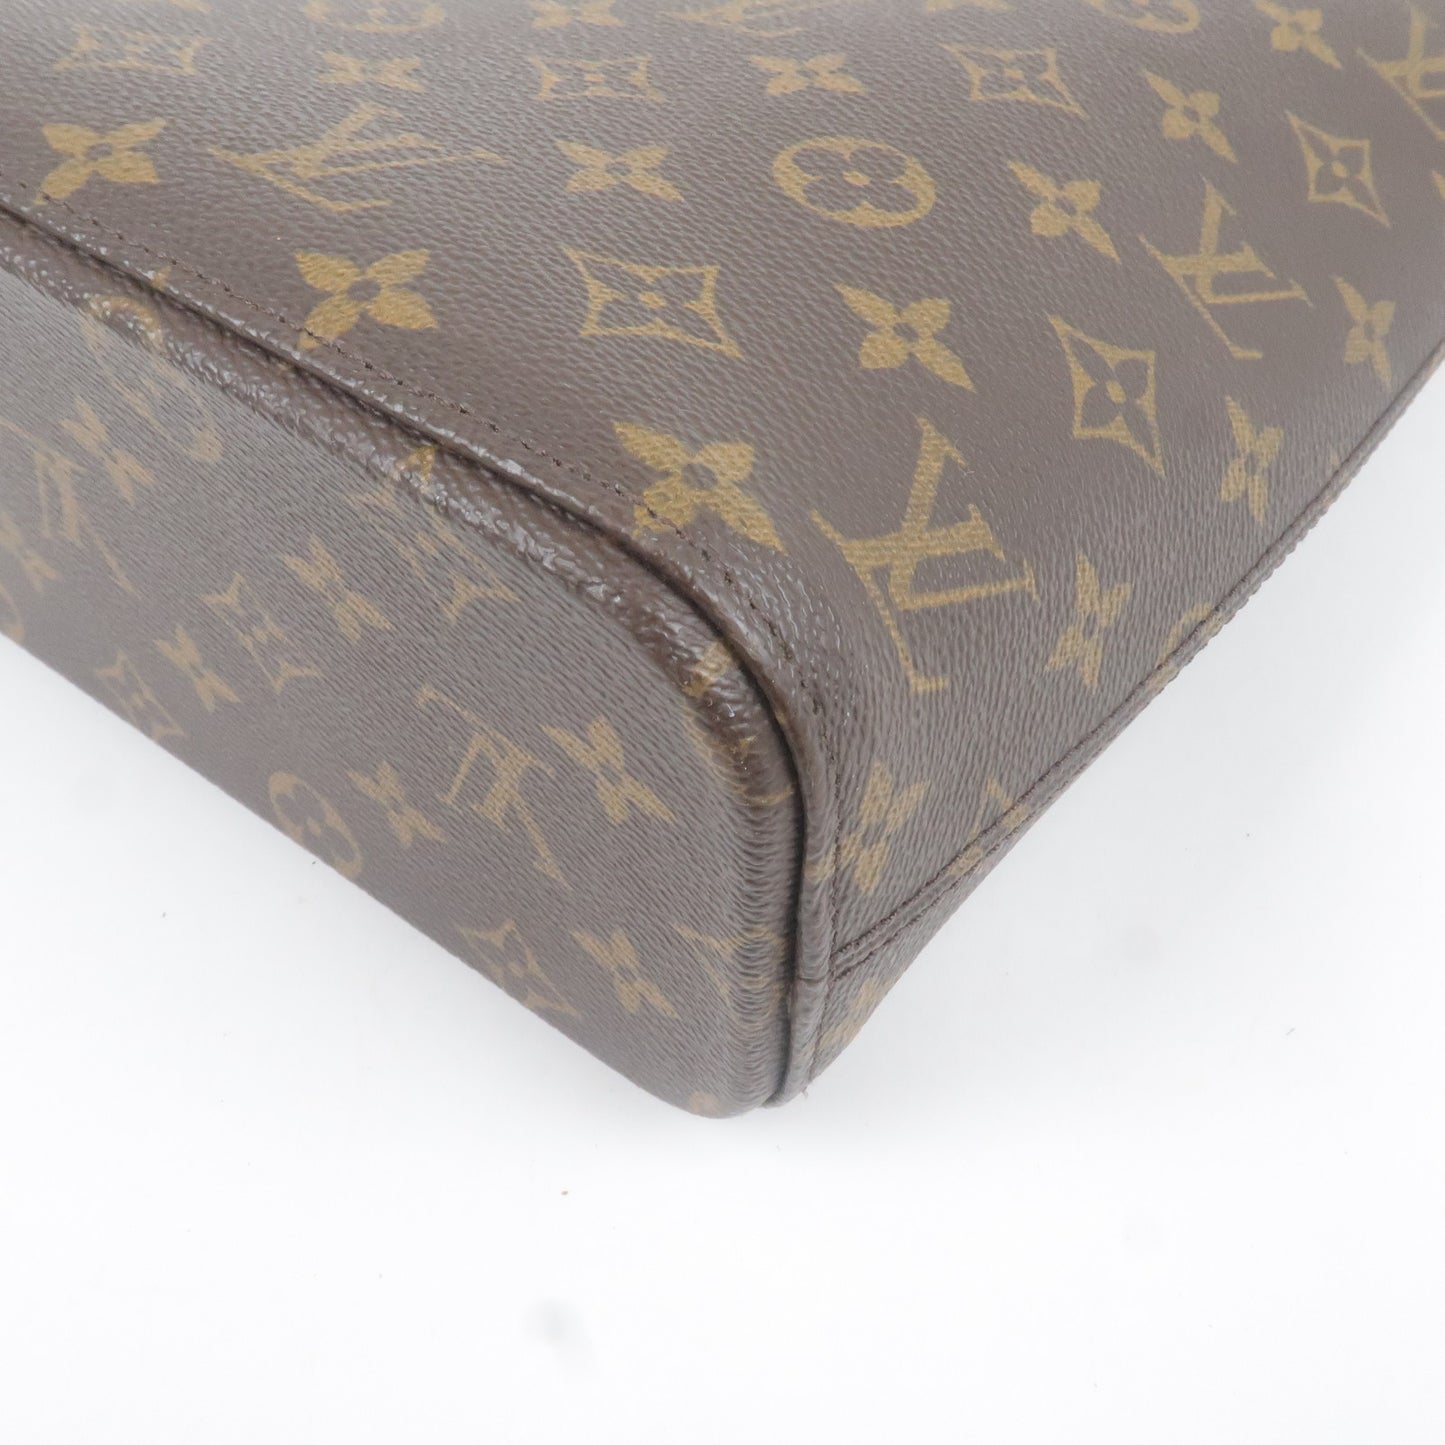 Monogram - Louis - Vuitton - Bag - M51155 – dct - Luco - Tote